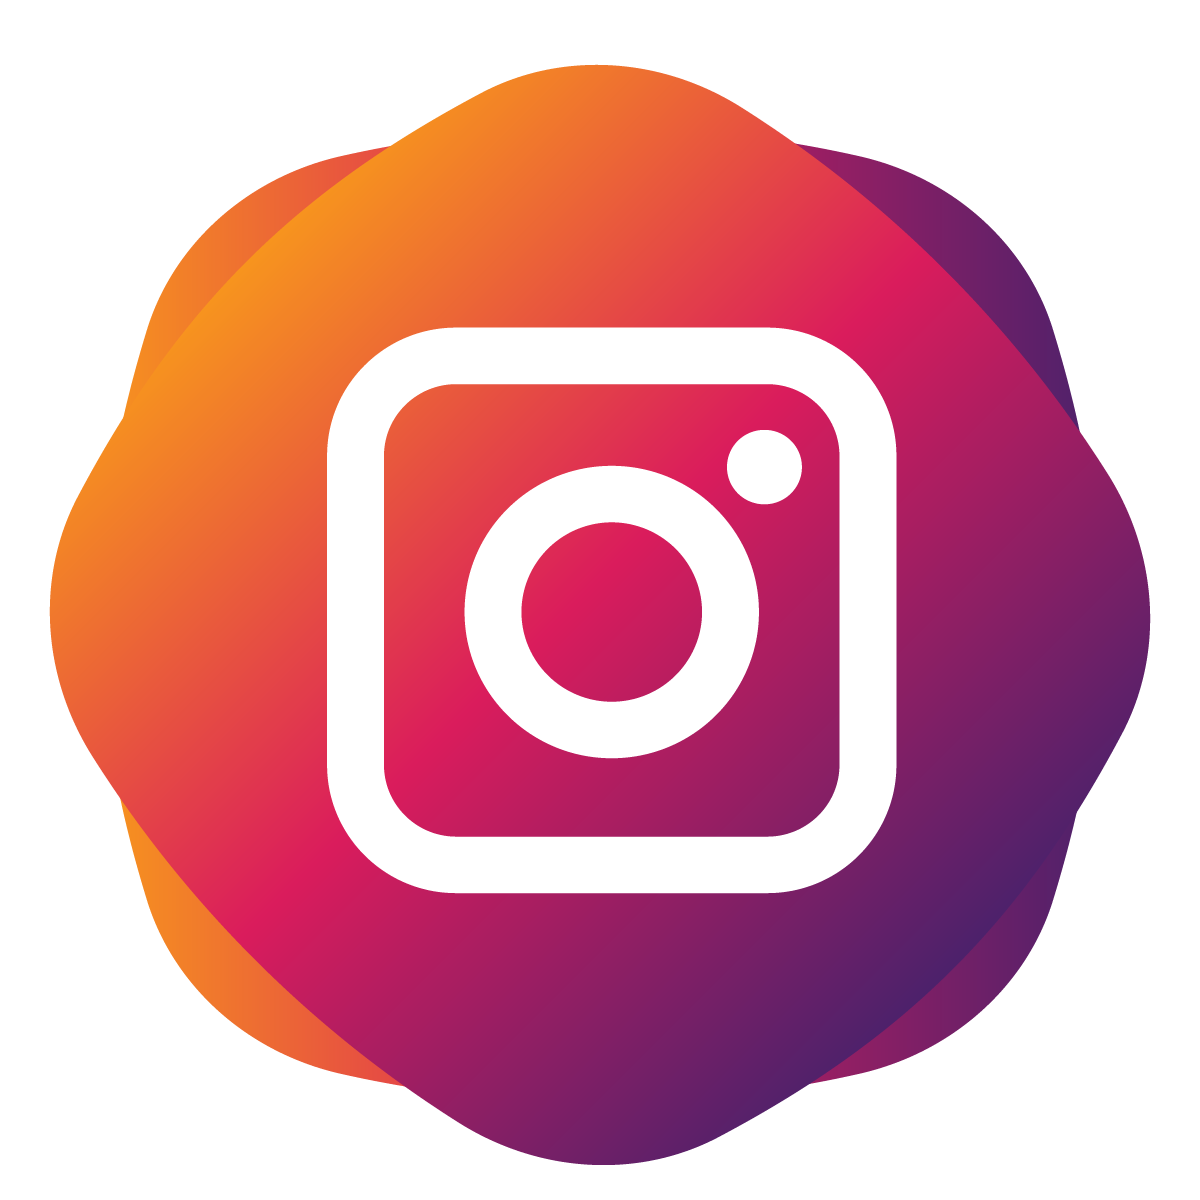 Www instagram com. Логотип Инстаграмм. Значки ИНМТ. Иконки для инстаграма. Иконка Instagram.